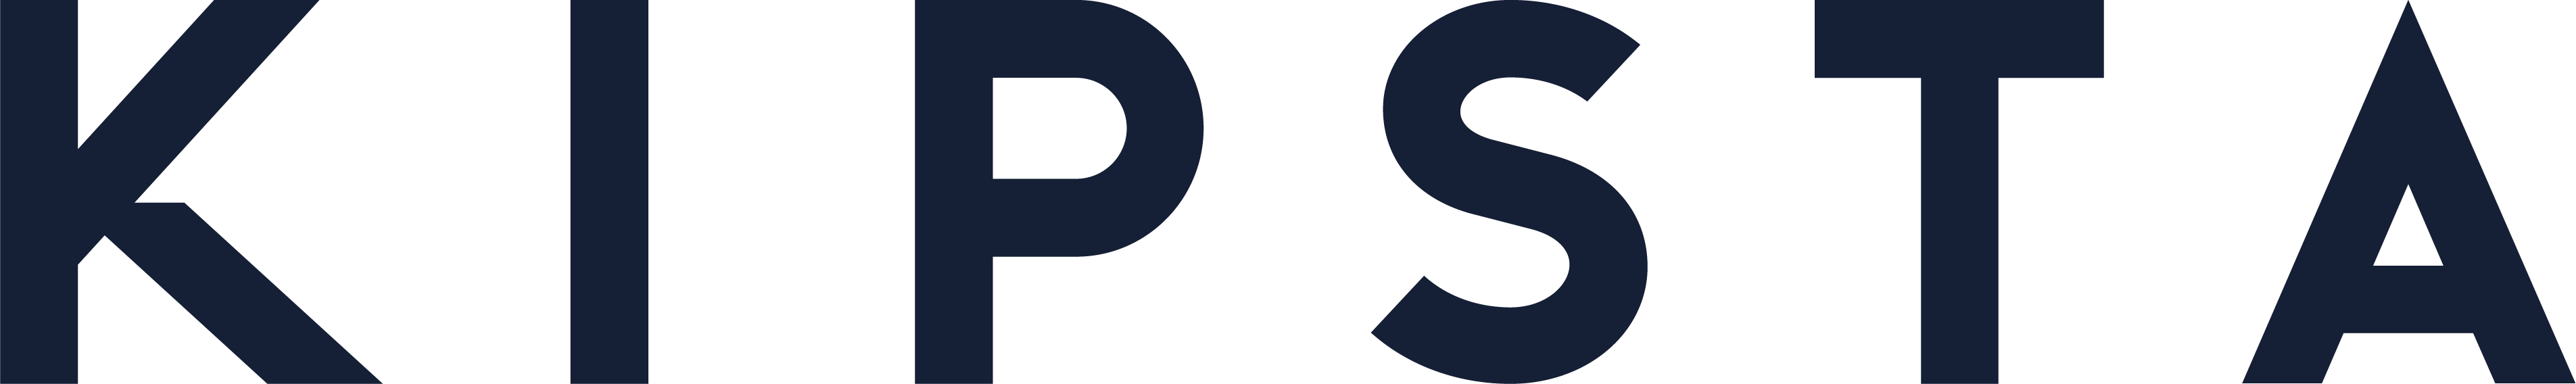 Kipsta logo blue 11